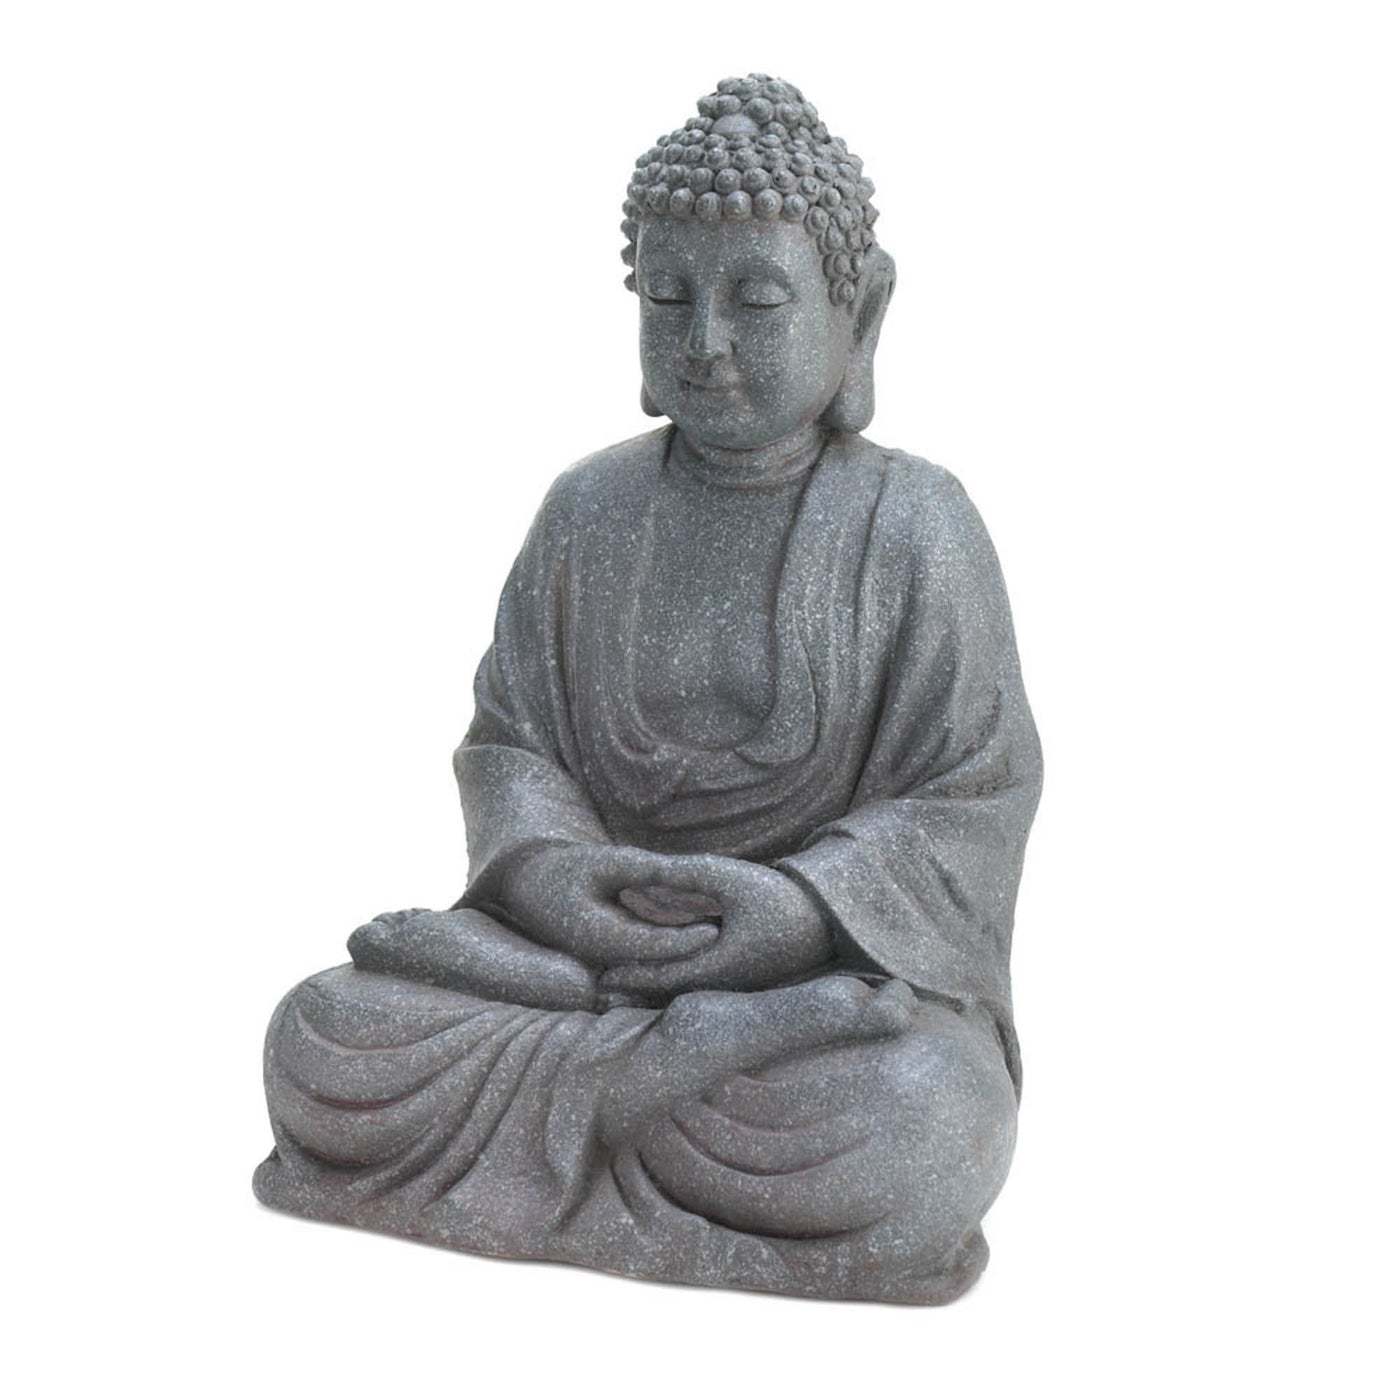 Meditating Buddha Statue - $50.72